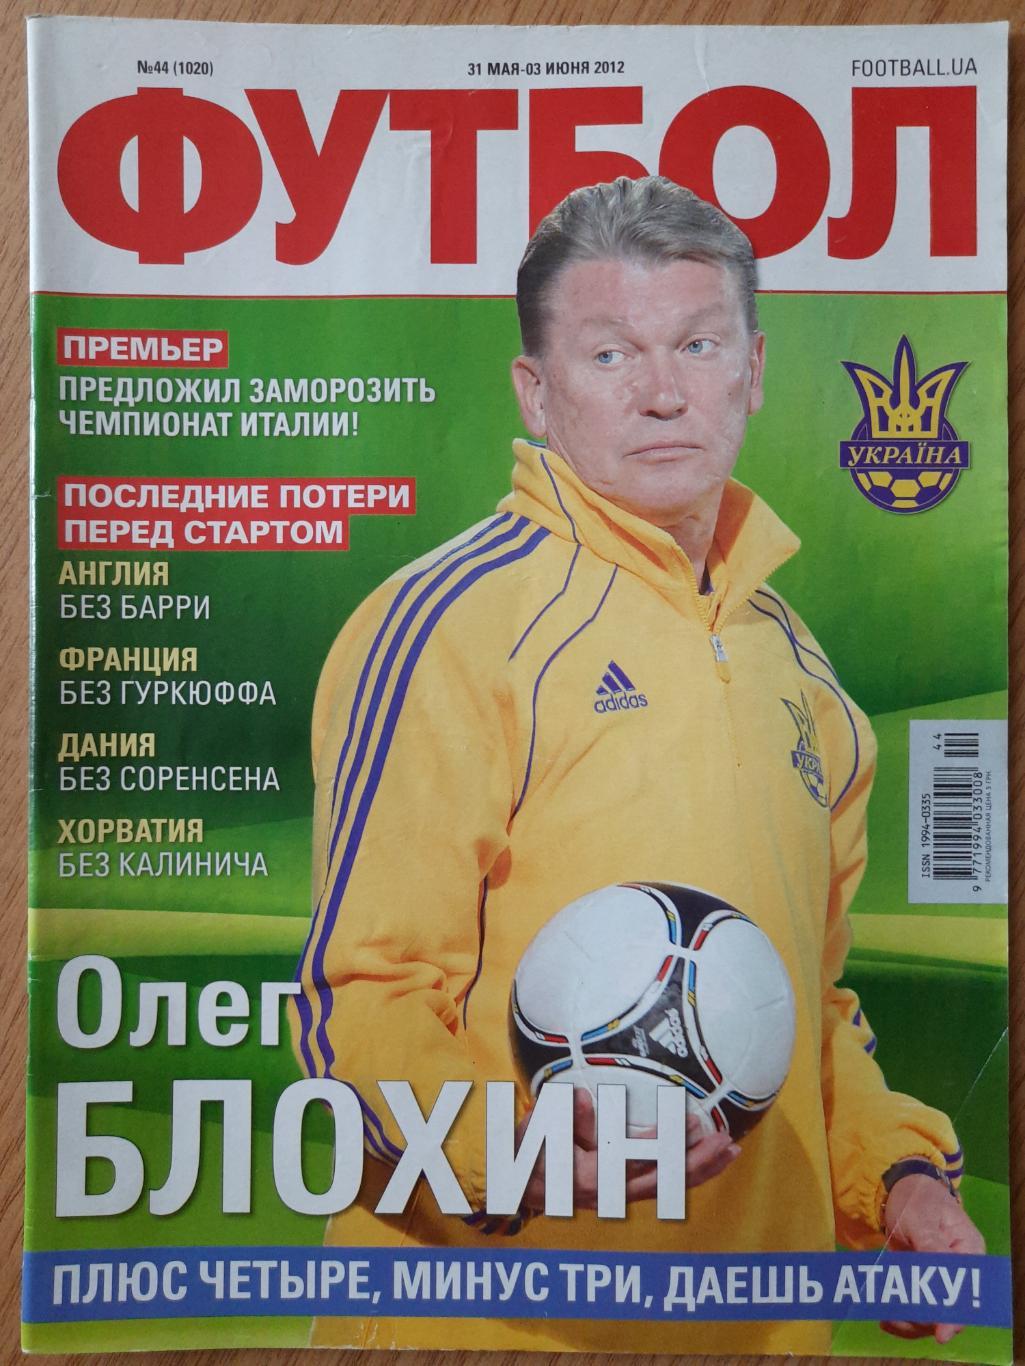 еженедельник Футбол #44 2012 , постер:коллаж...